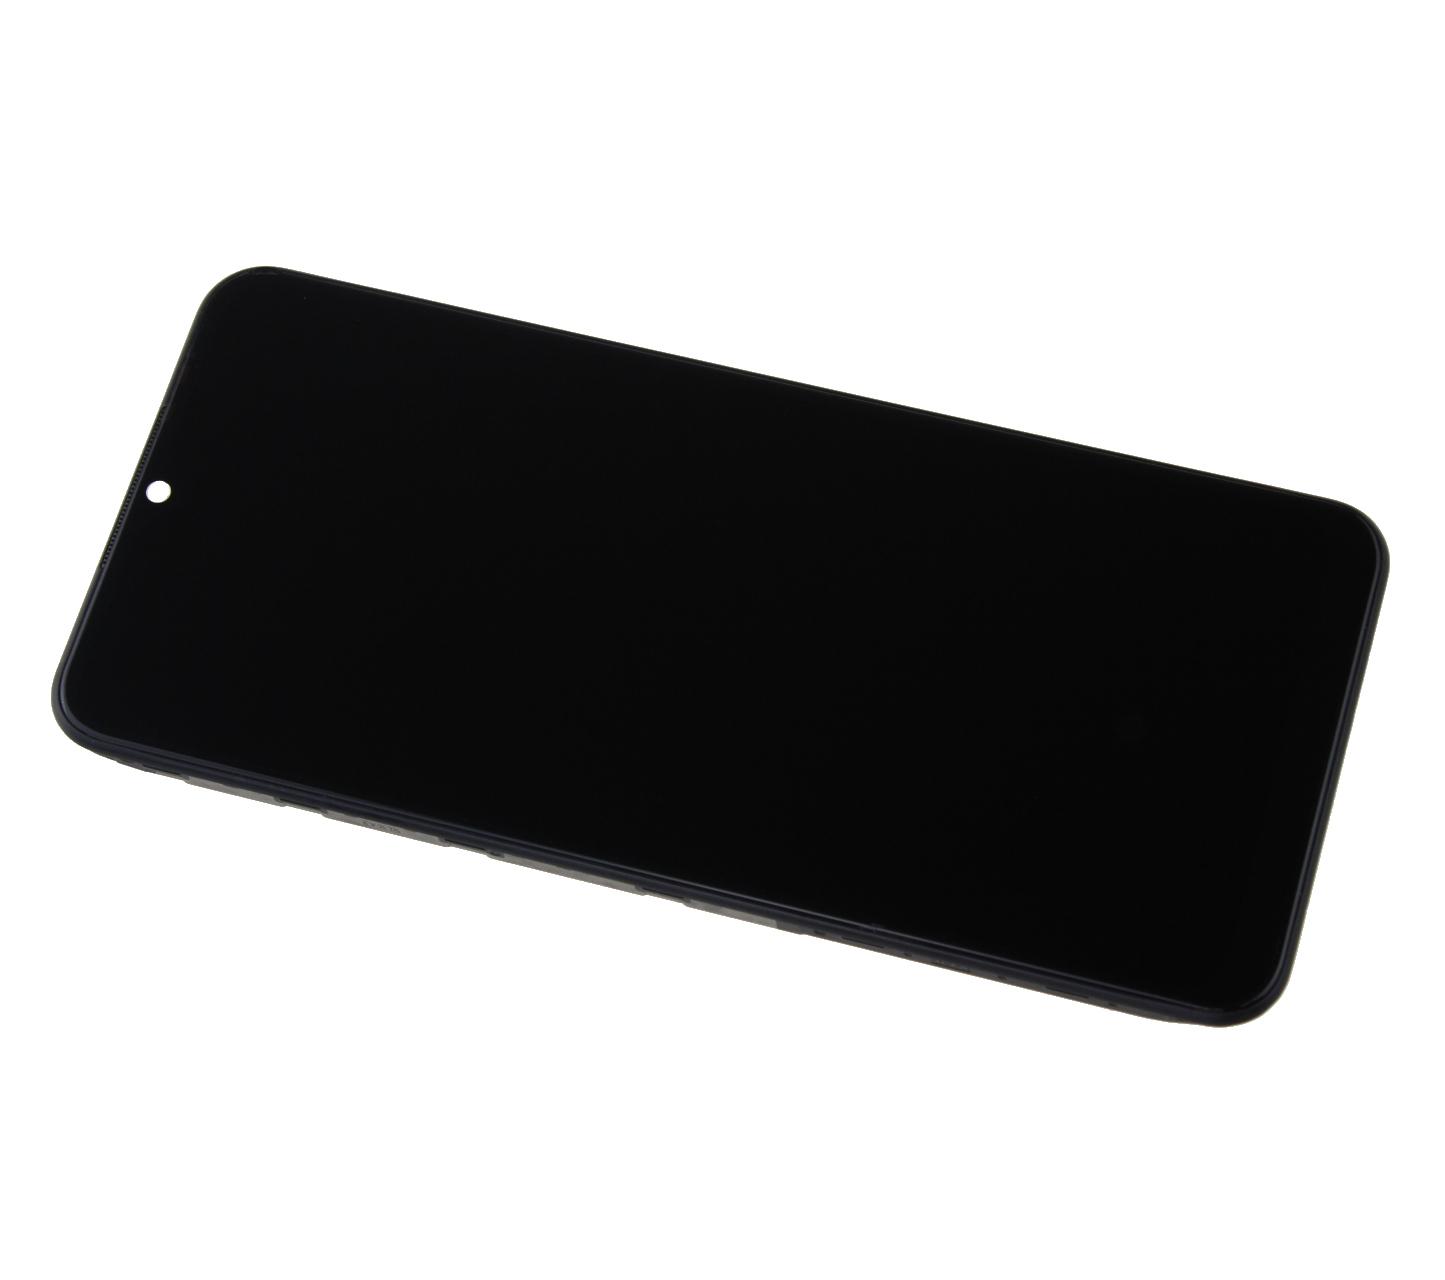 Originál LCD + Dotyková vrstva Vivo Y21S černá - repasovaný díl vyměněné sklíčko